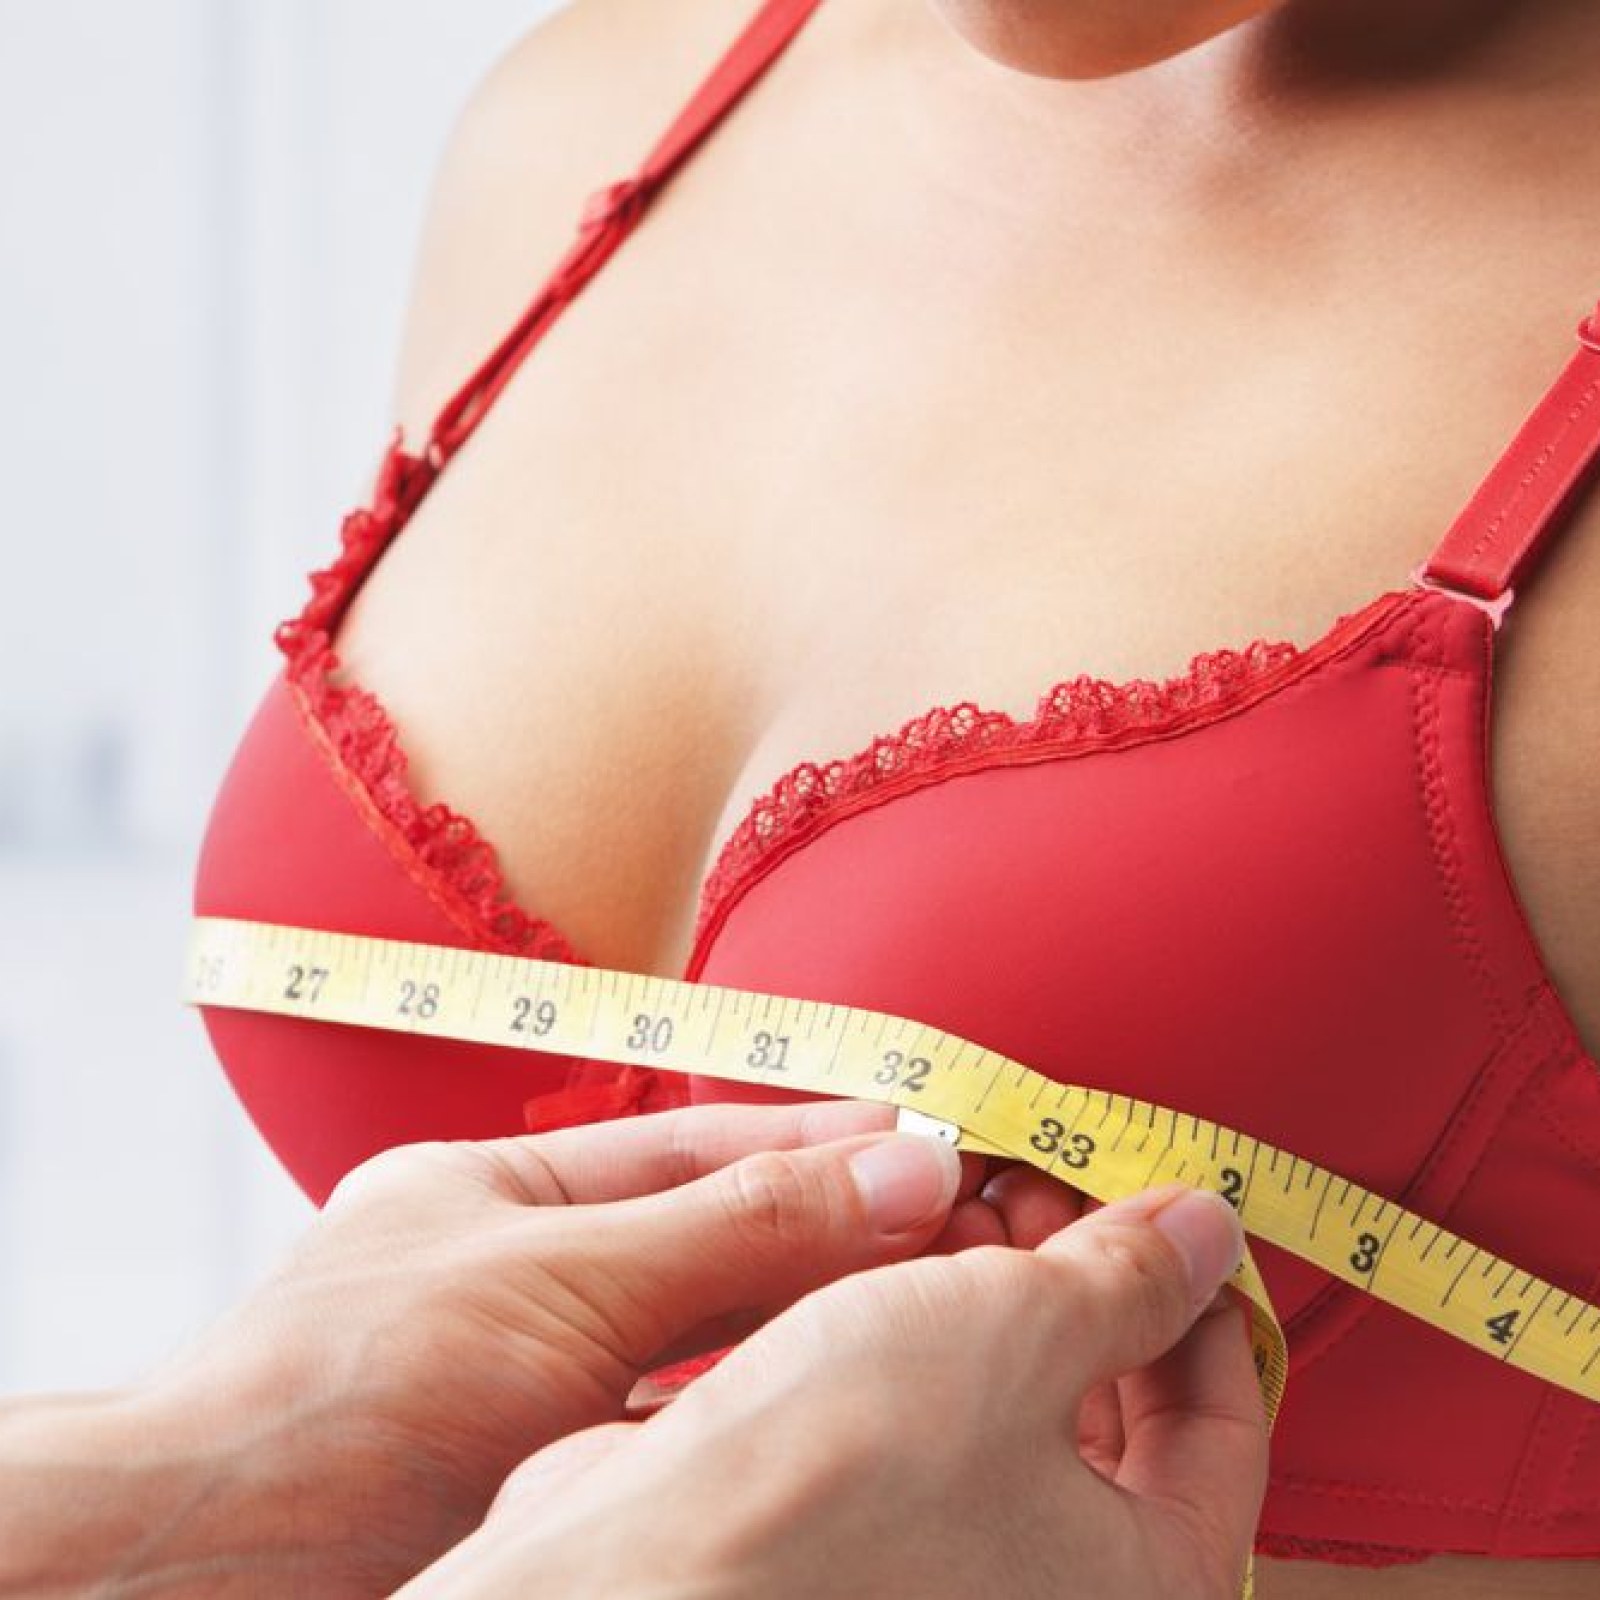 High-Tech Bra Prevents Women From Overeating: Sensors Detect